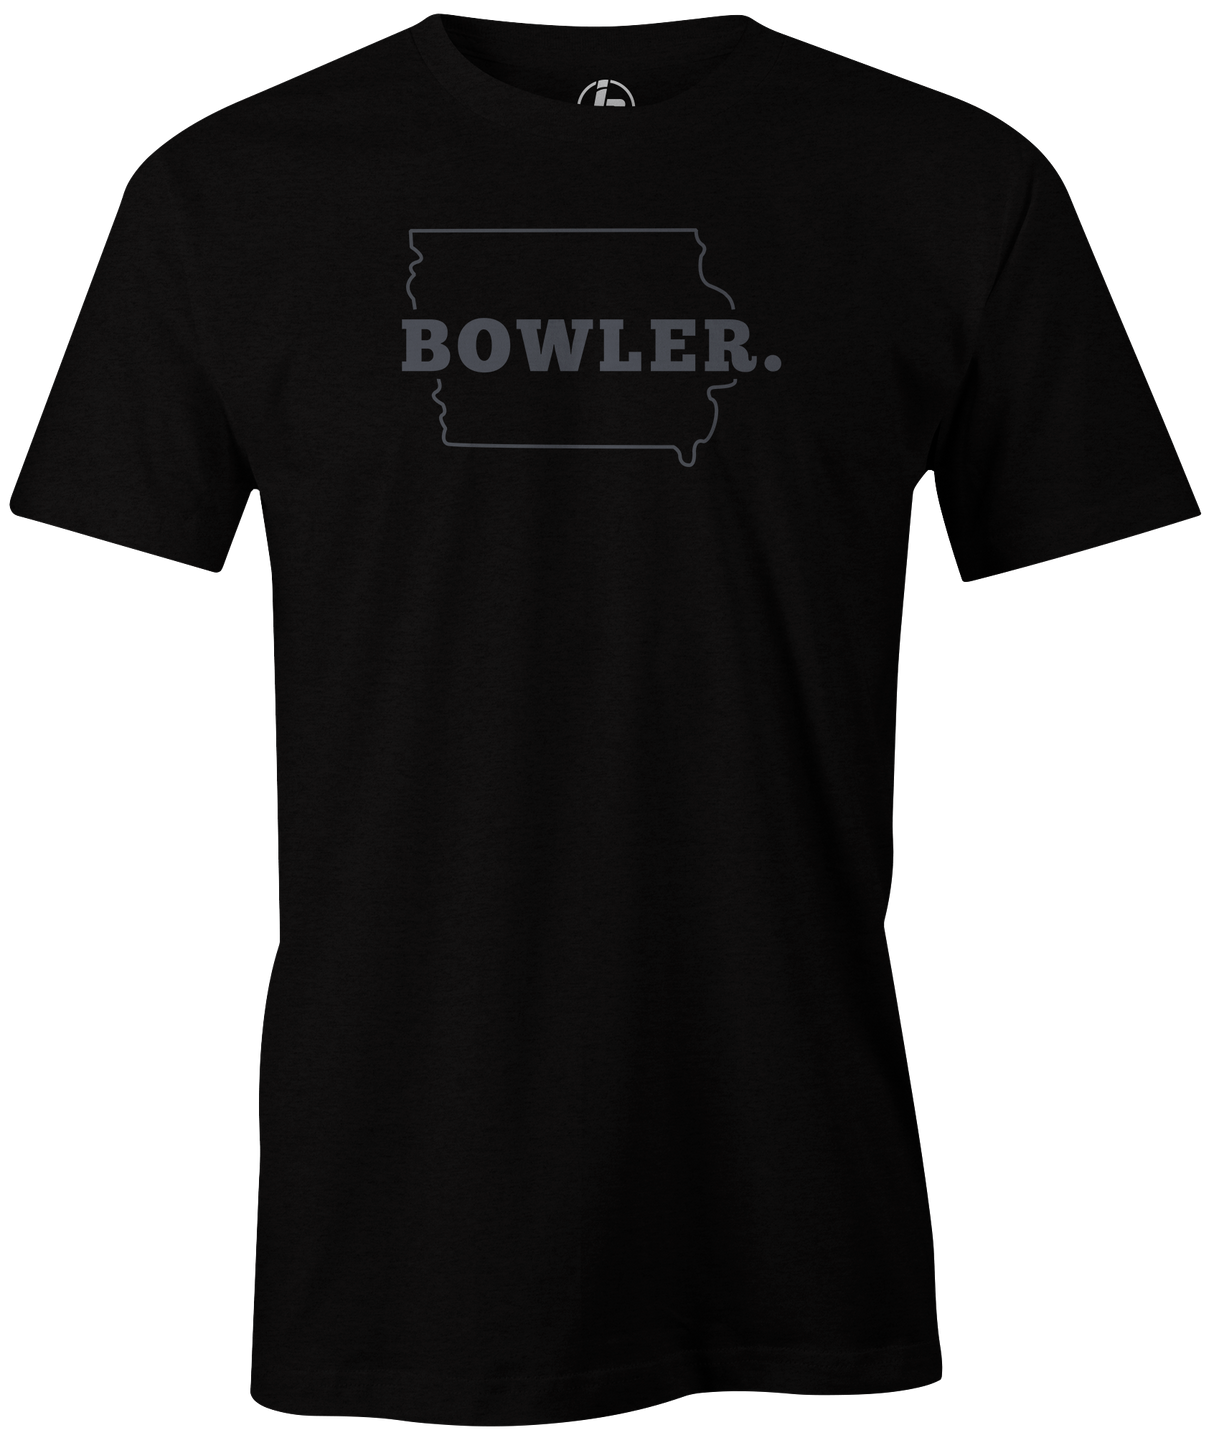 Iowa State Men's Bowling T-shirt, Black, Cool, novelty, tshirt, tee, tee-shirt, tee shirt, teeshirt, team, comfortable